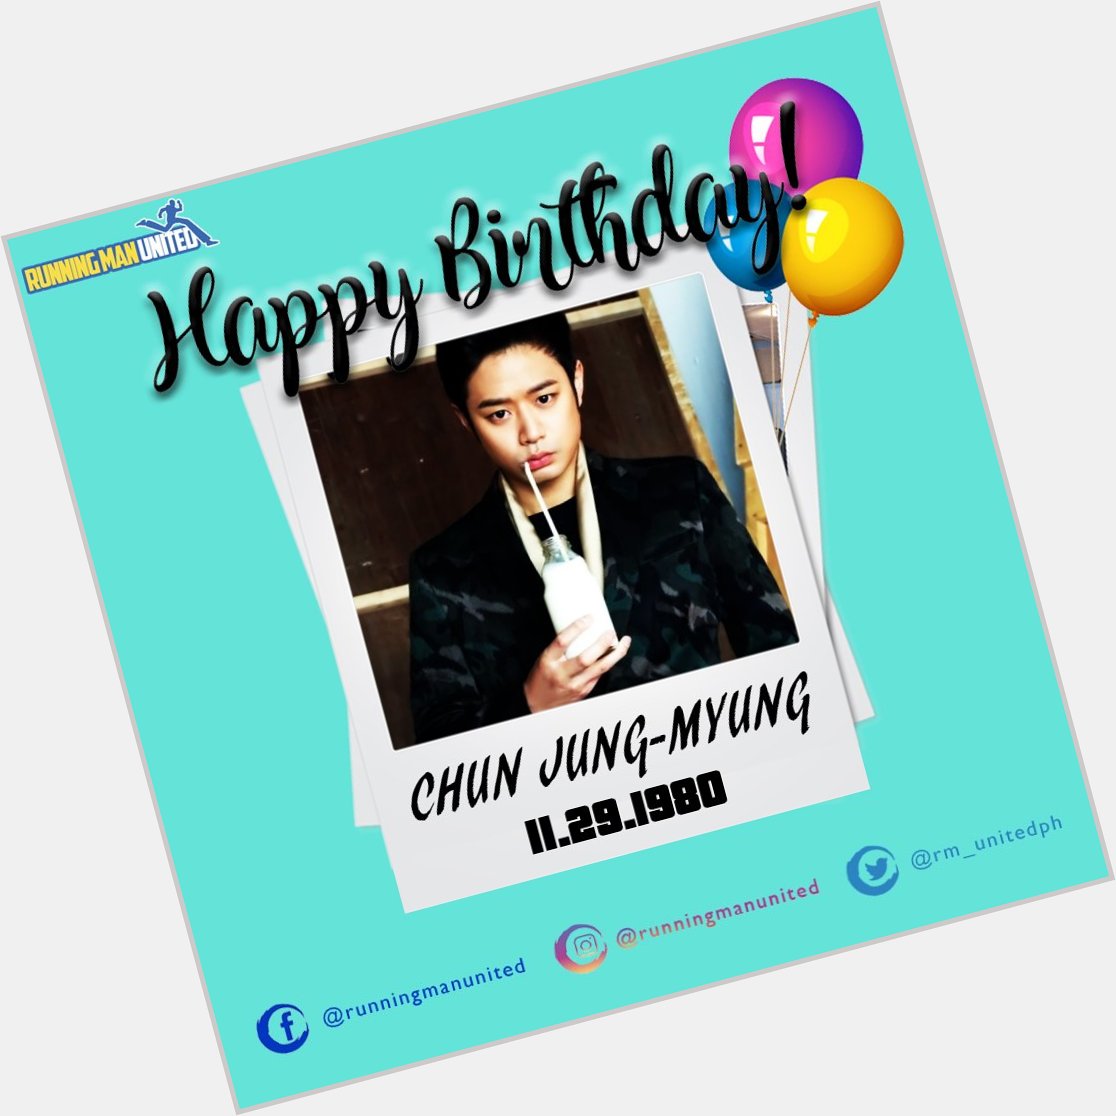 Happy Birthday Chun Jung-myung! 